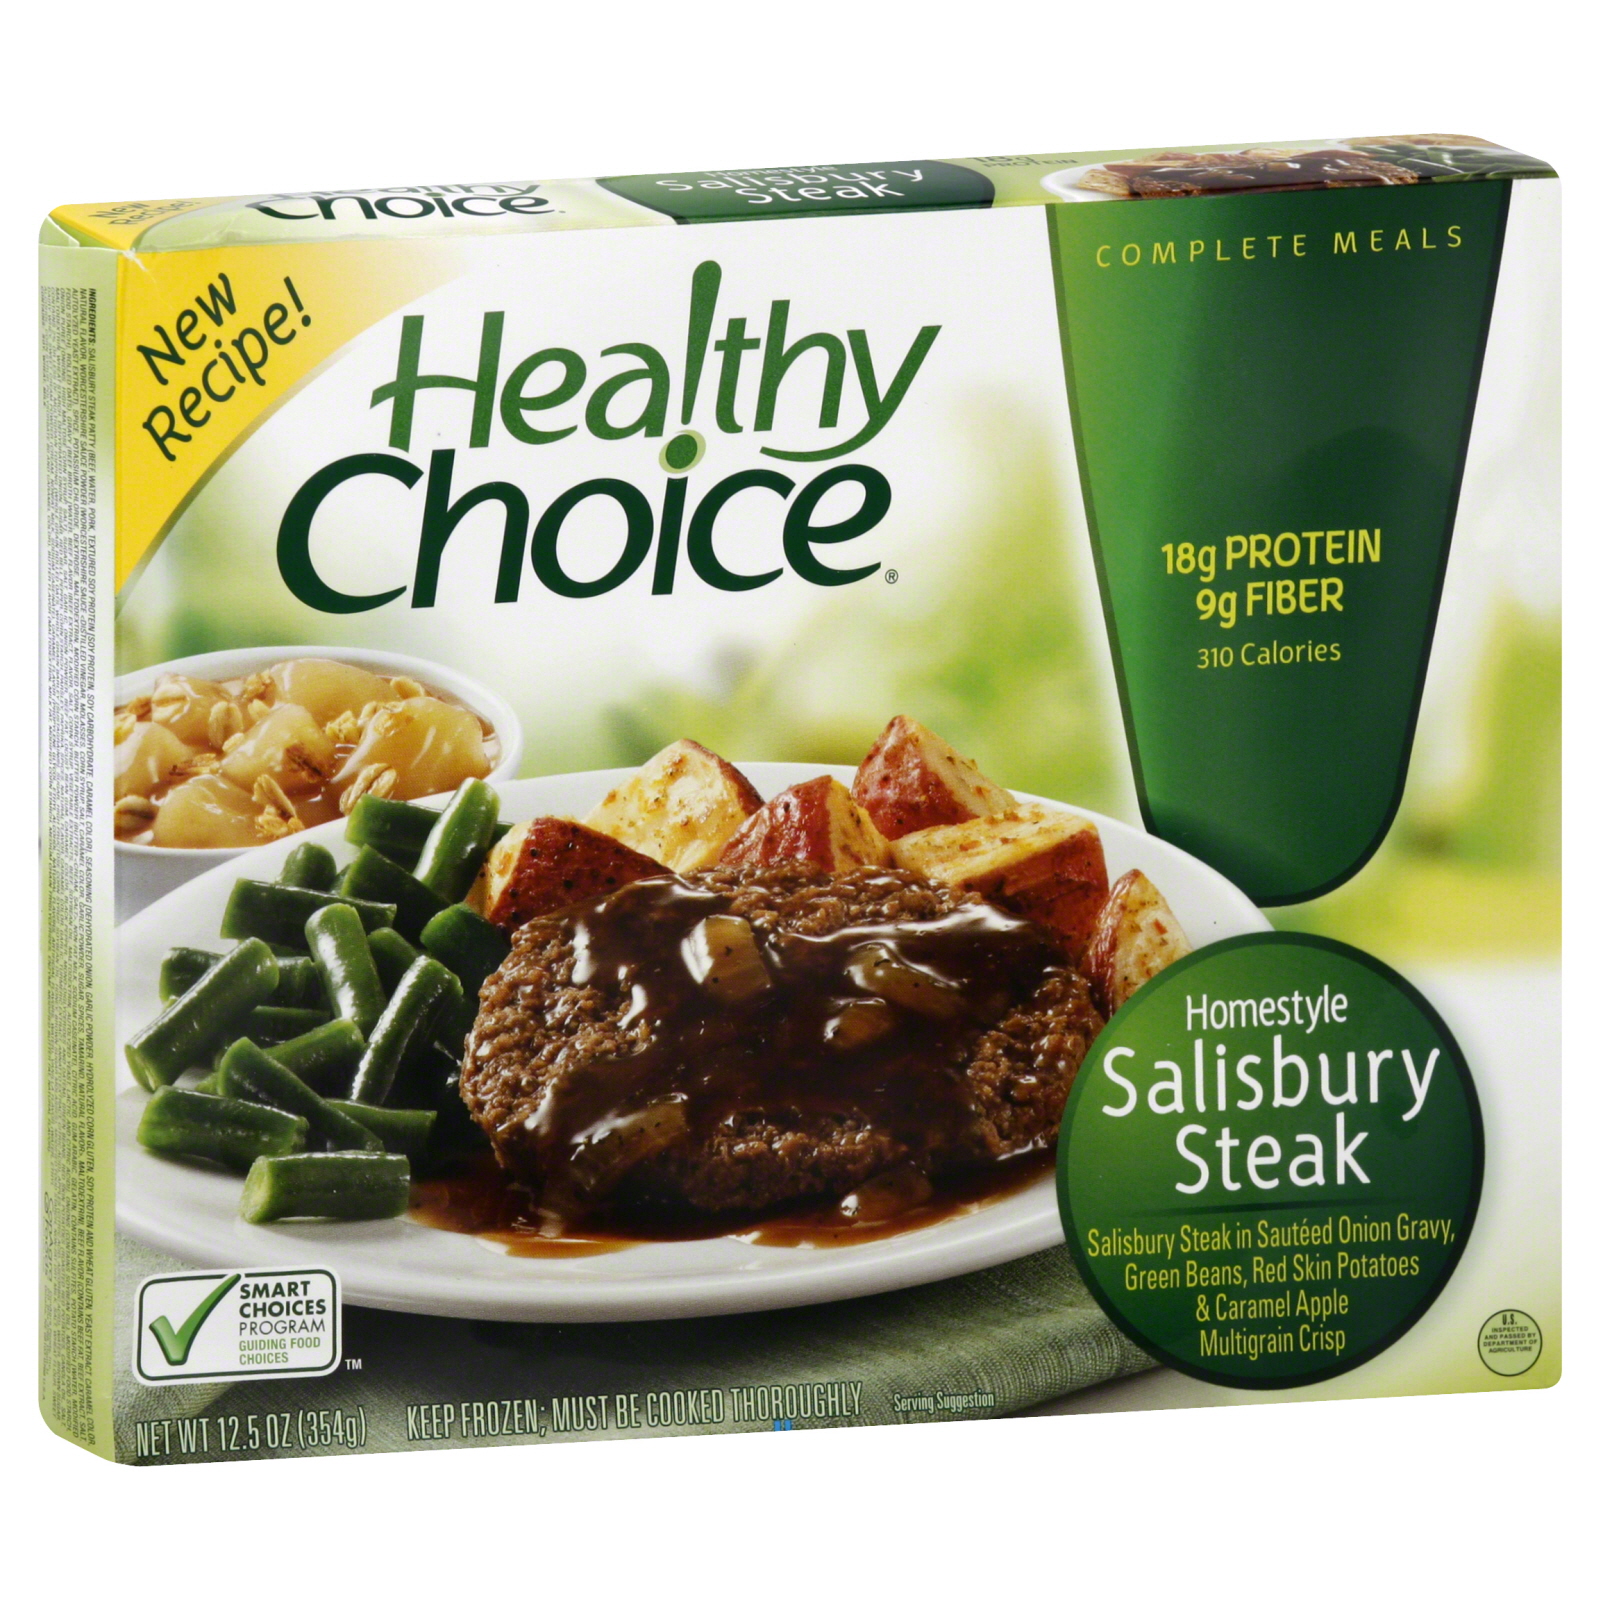 Healthy Choice Complete Meals Homestyle Salisbury Steak, 12.5 oz (354 g)